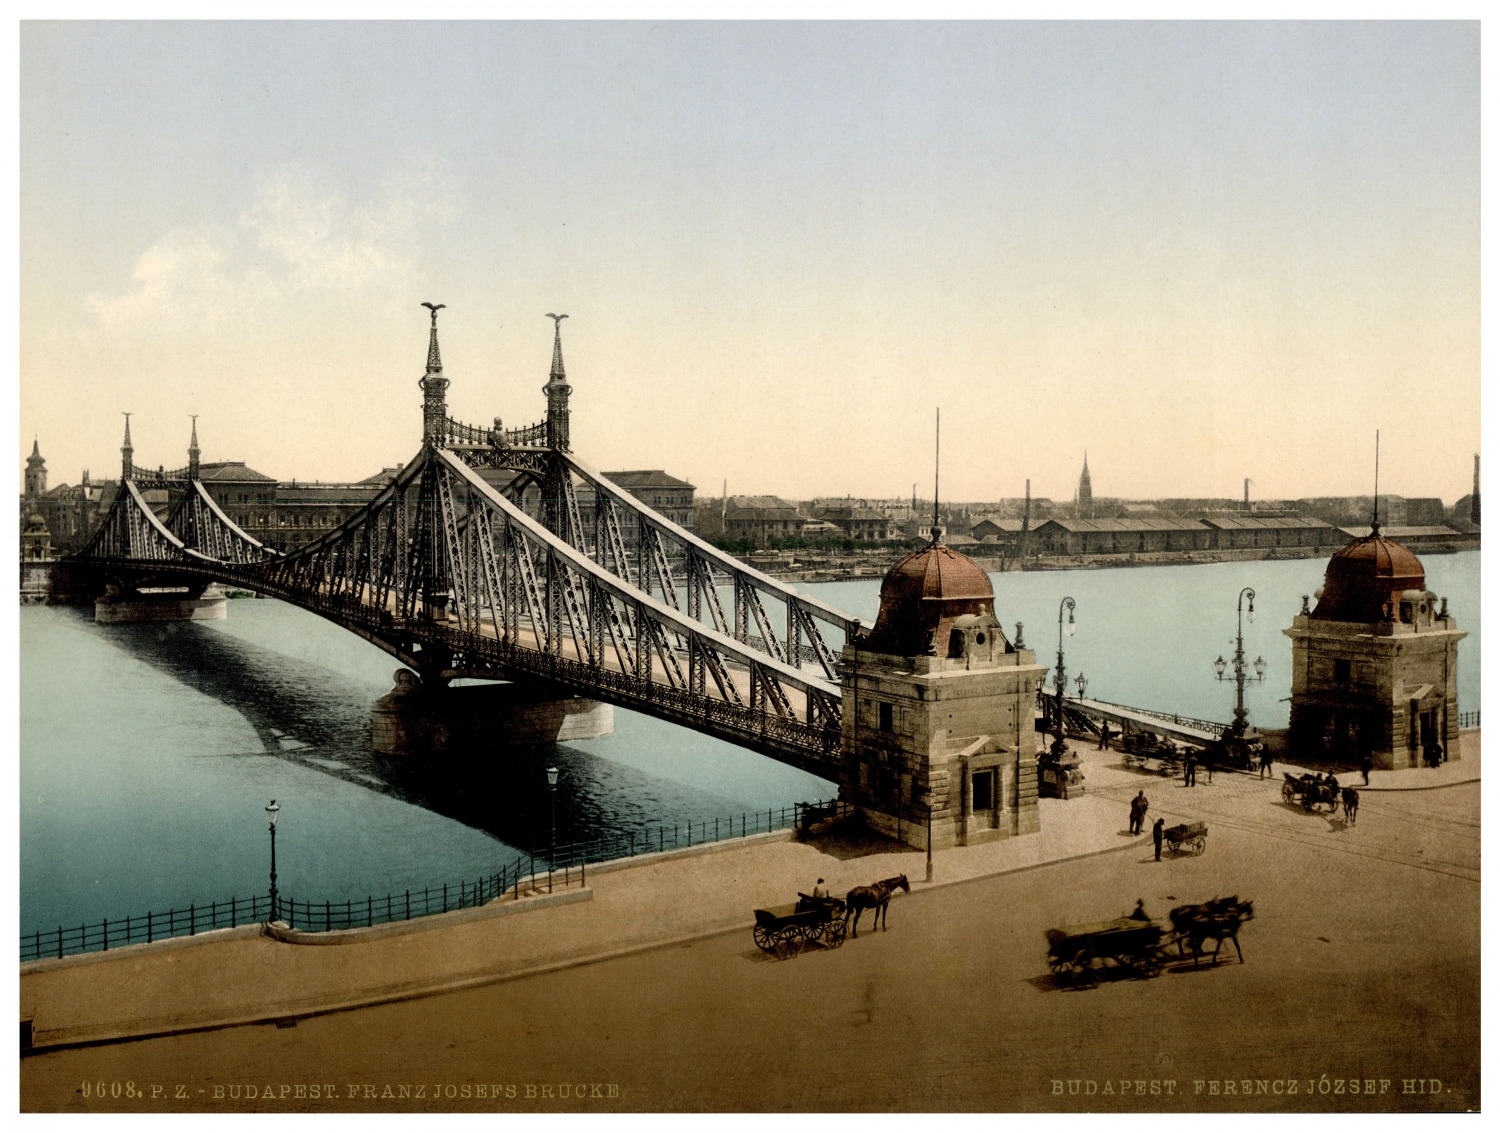 Magyarország, Budapest, Ferenc József hid vintage photochrome, Hungary, Budapest